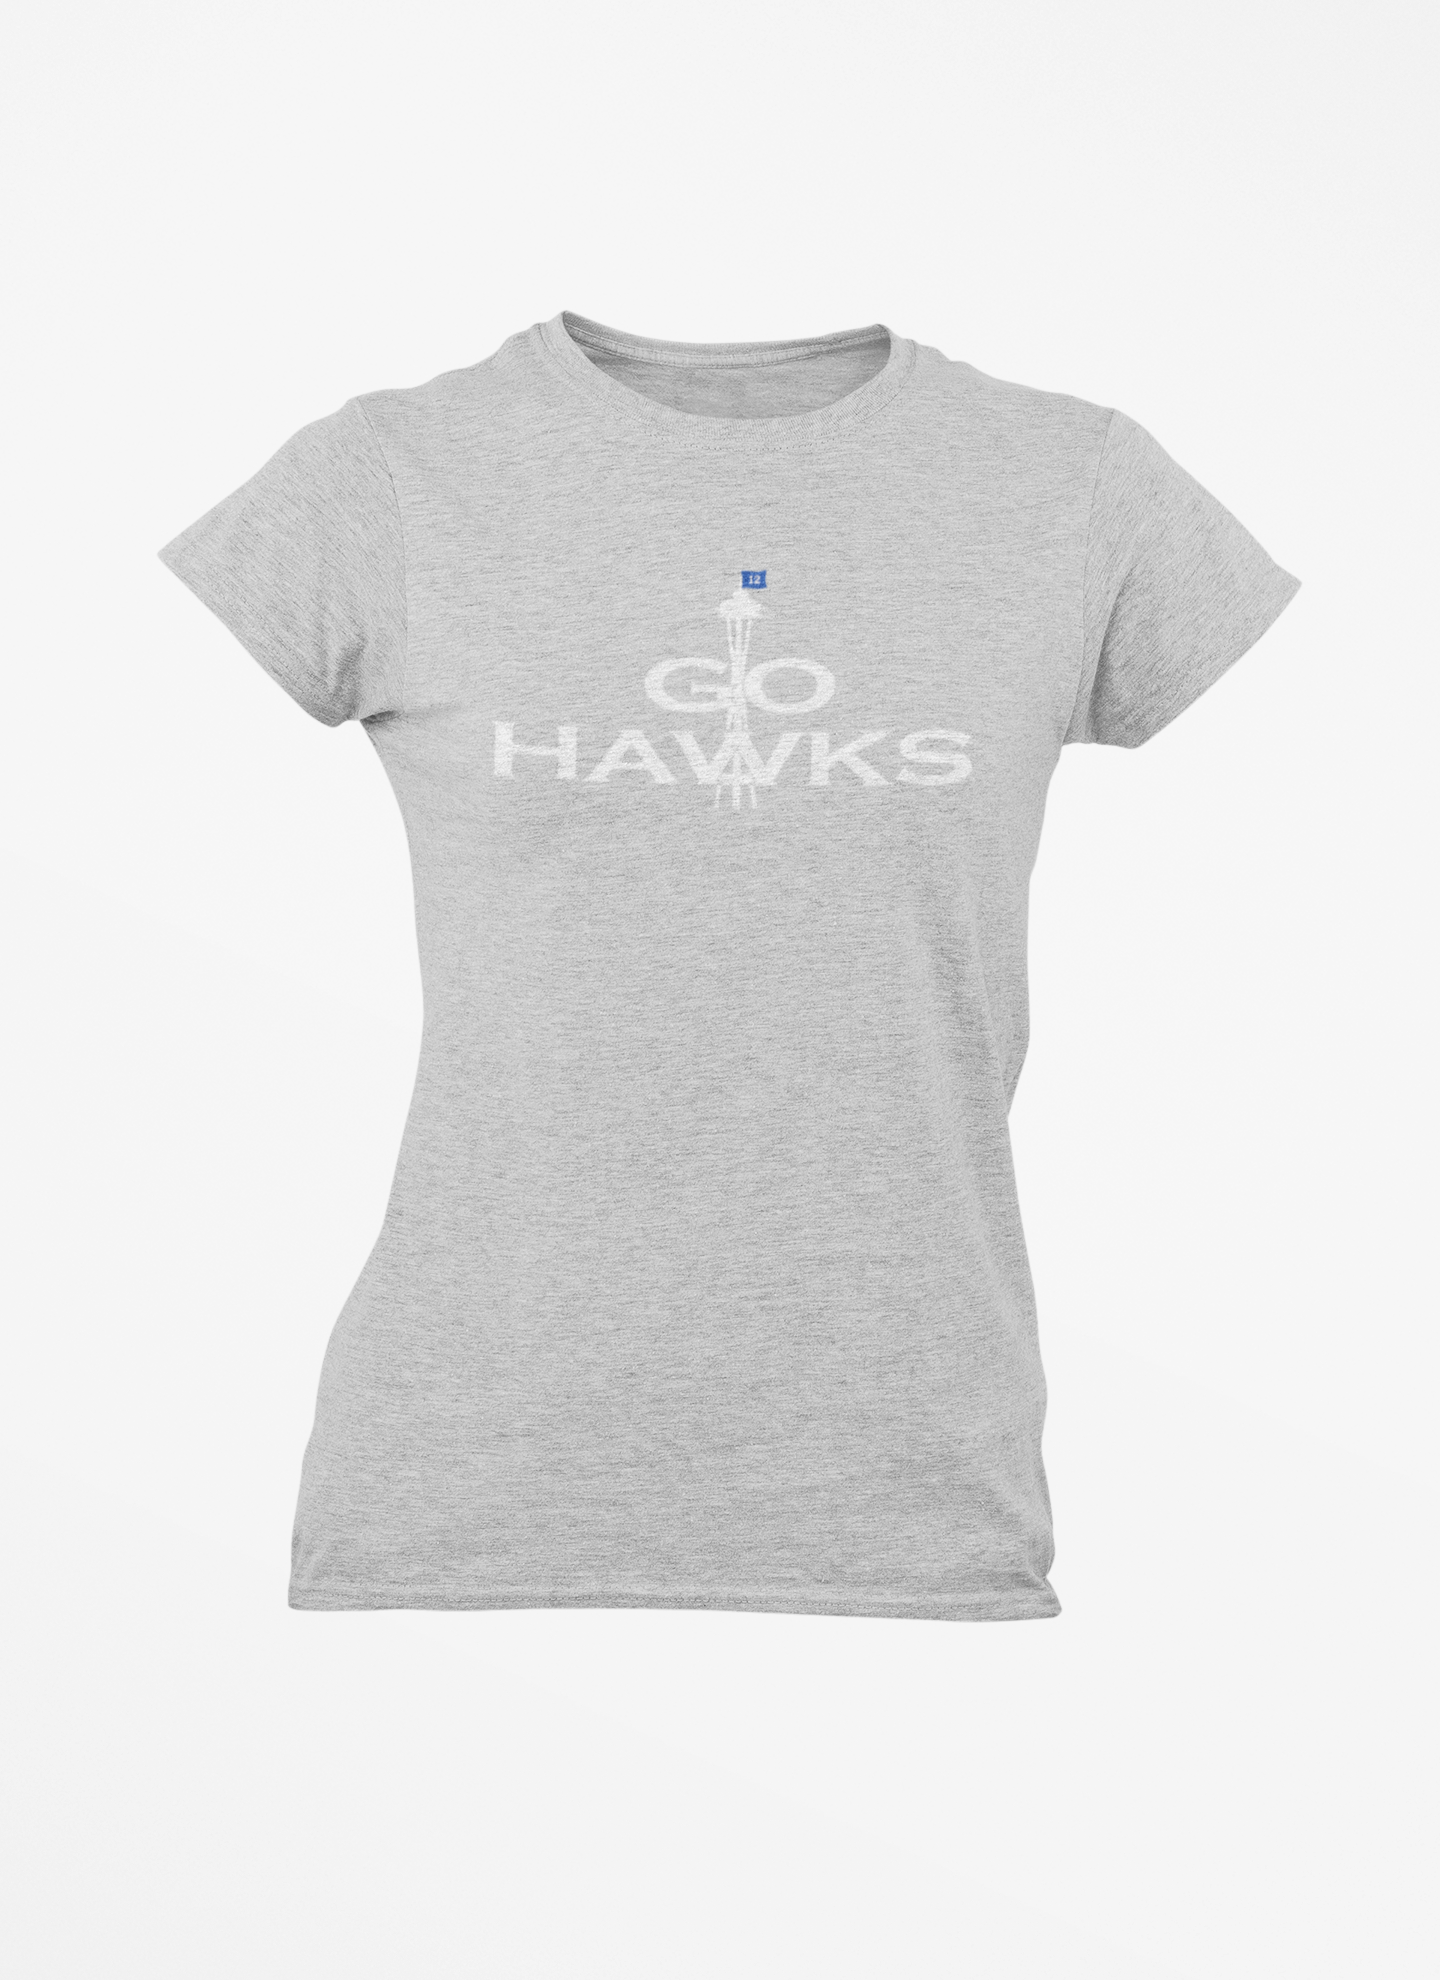 Go Hawks Women’s Gray T-shirt